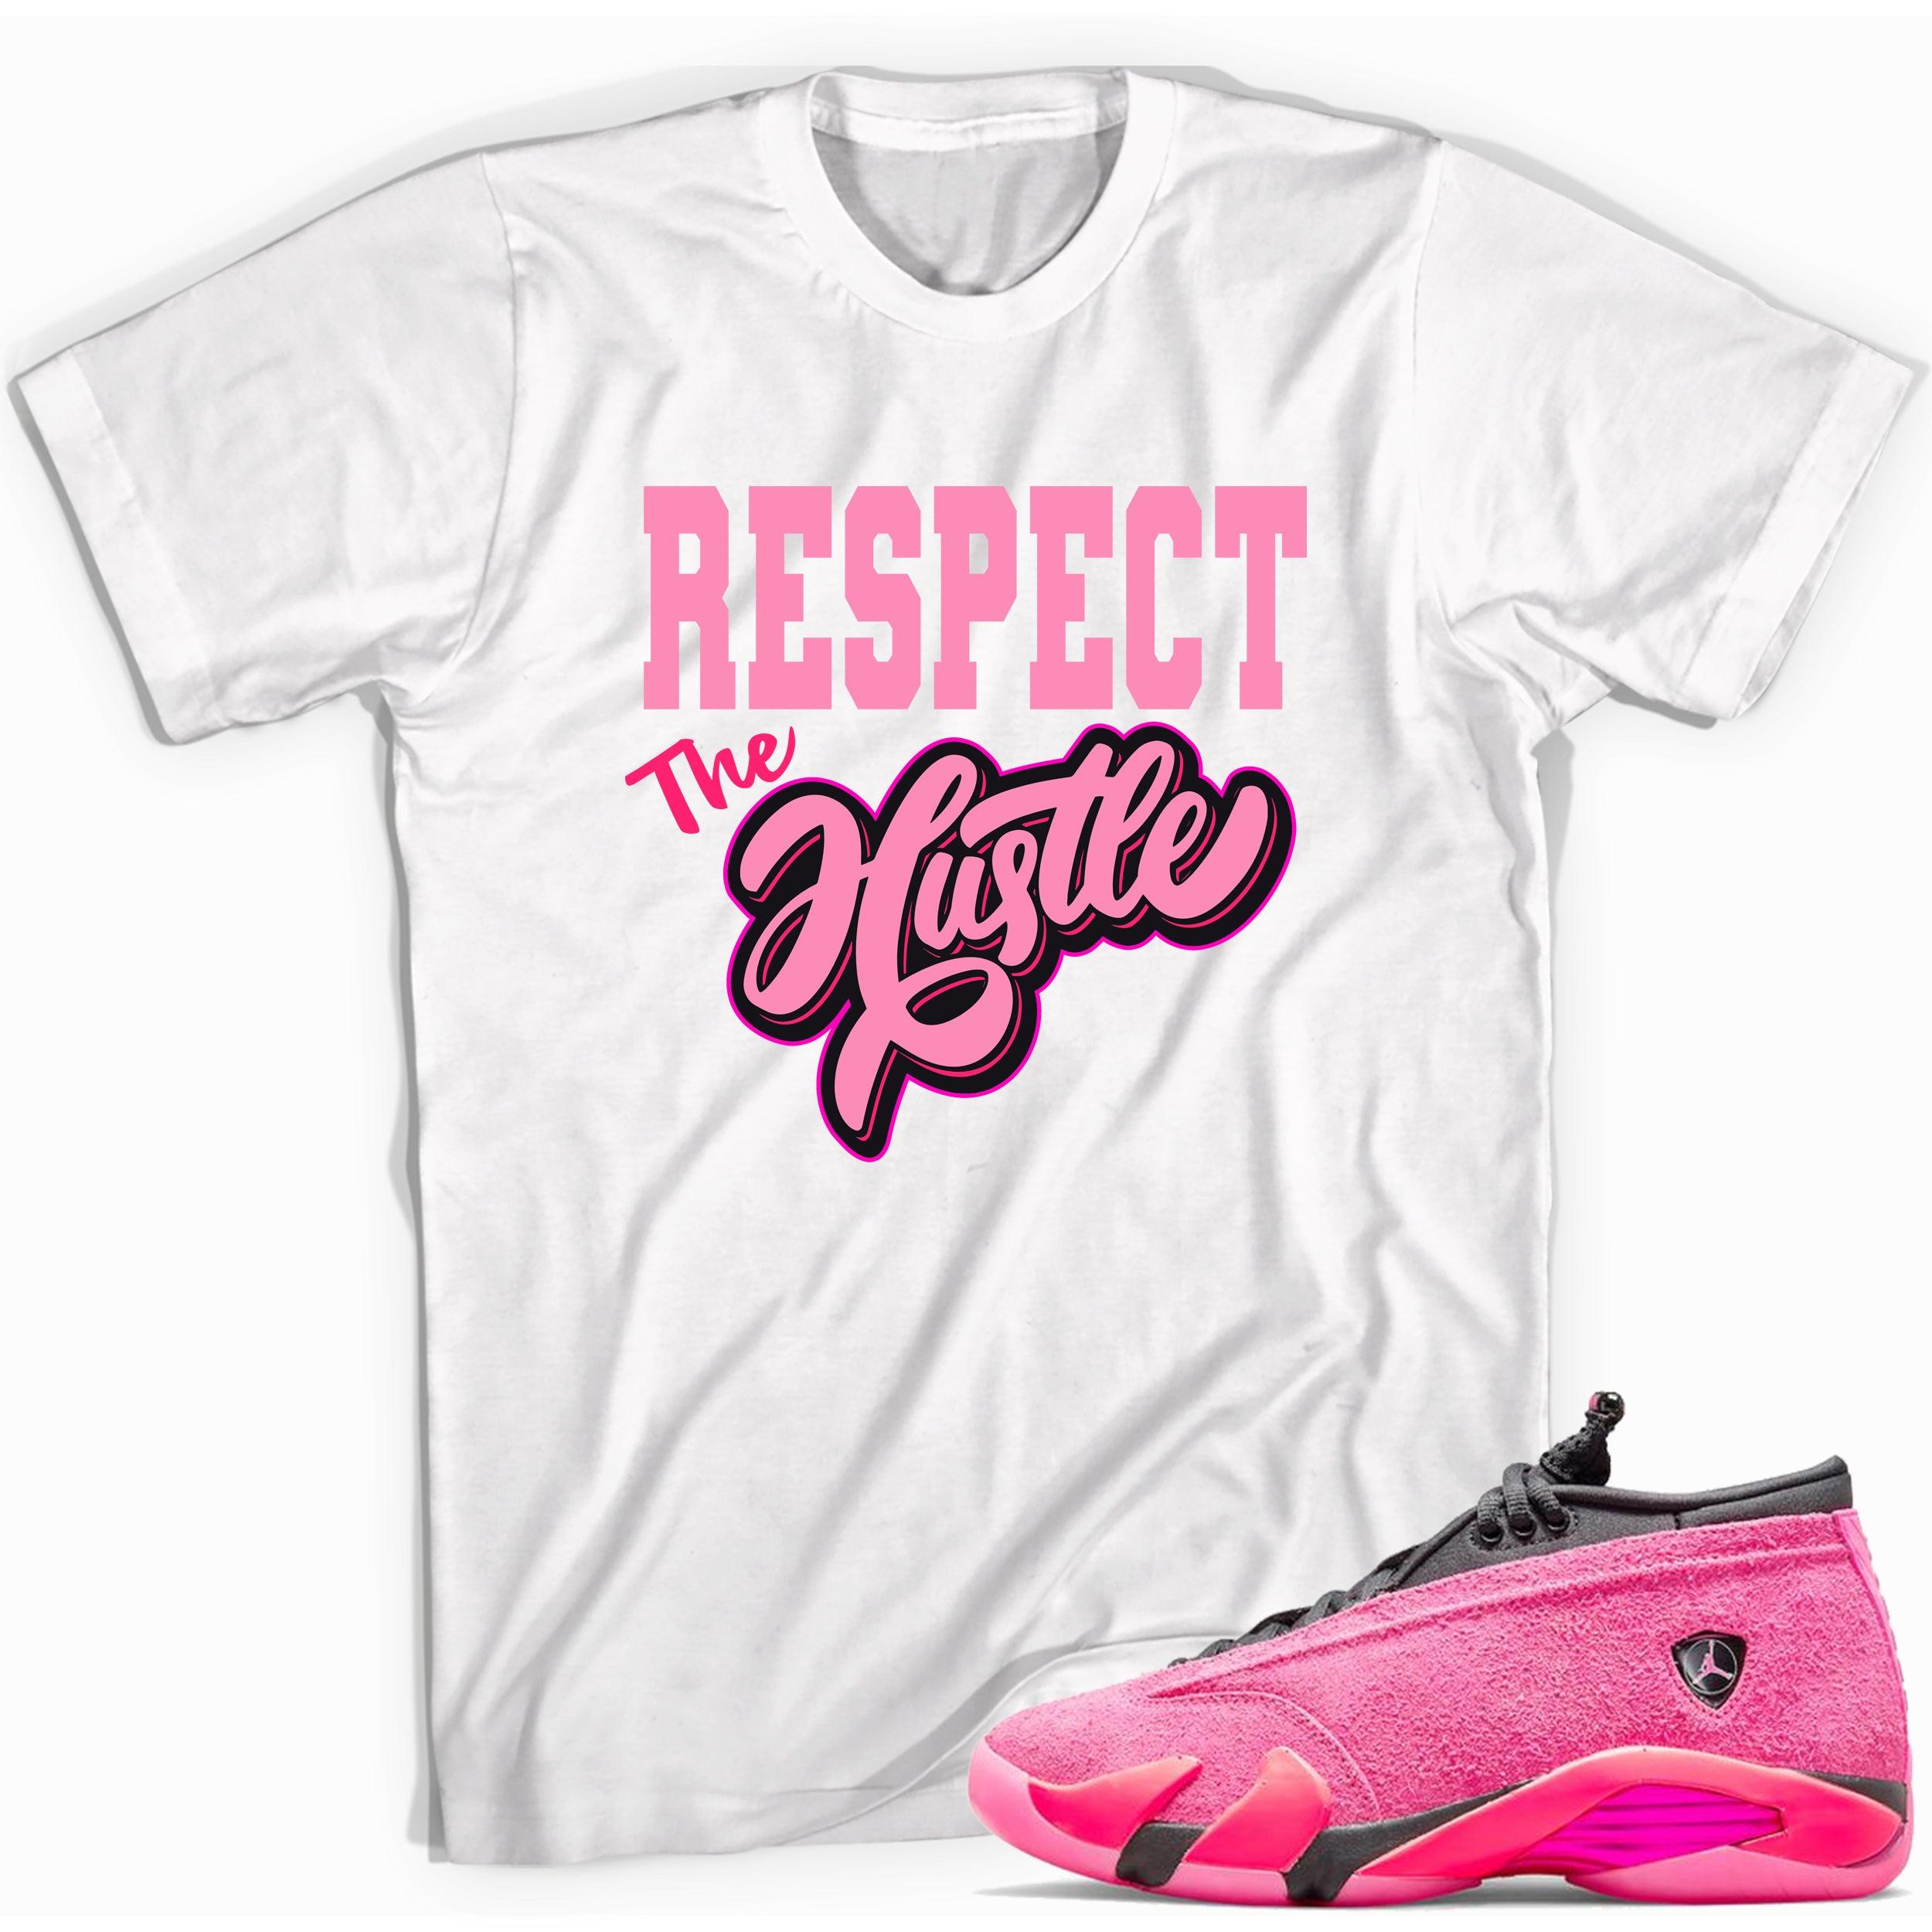  Respect The Hustle Shirt AJ 14s Low Shocking Pink photo